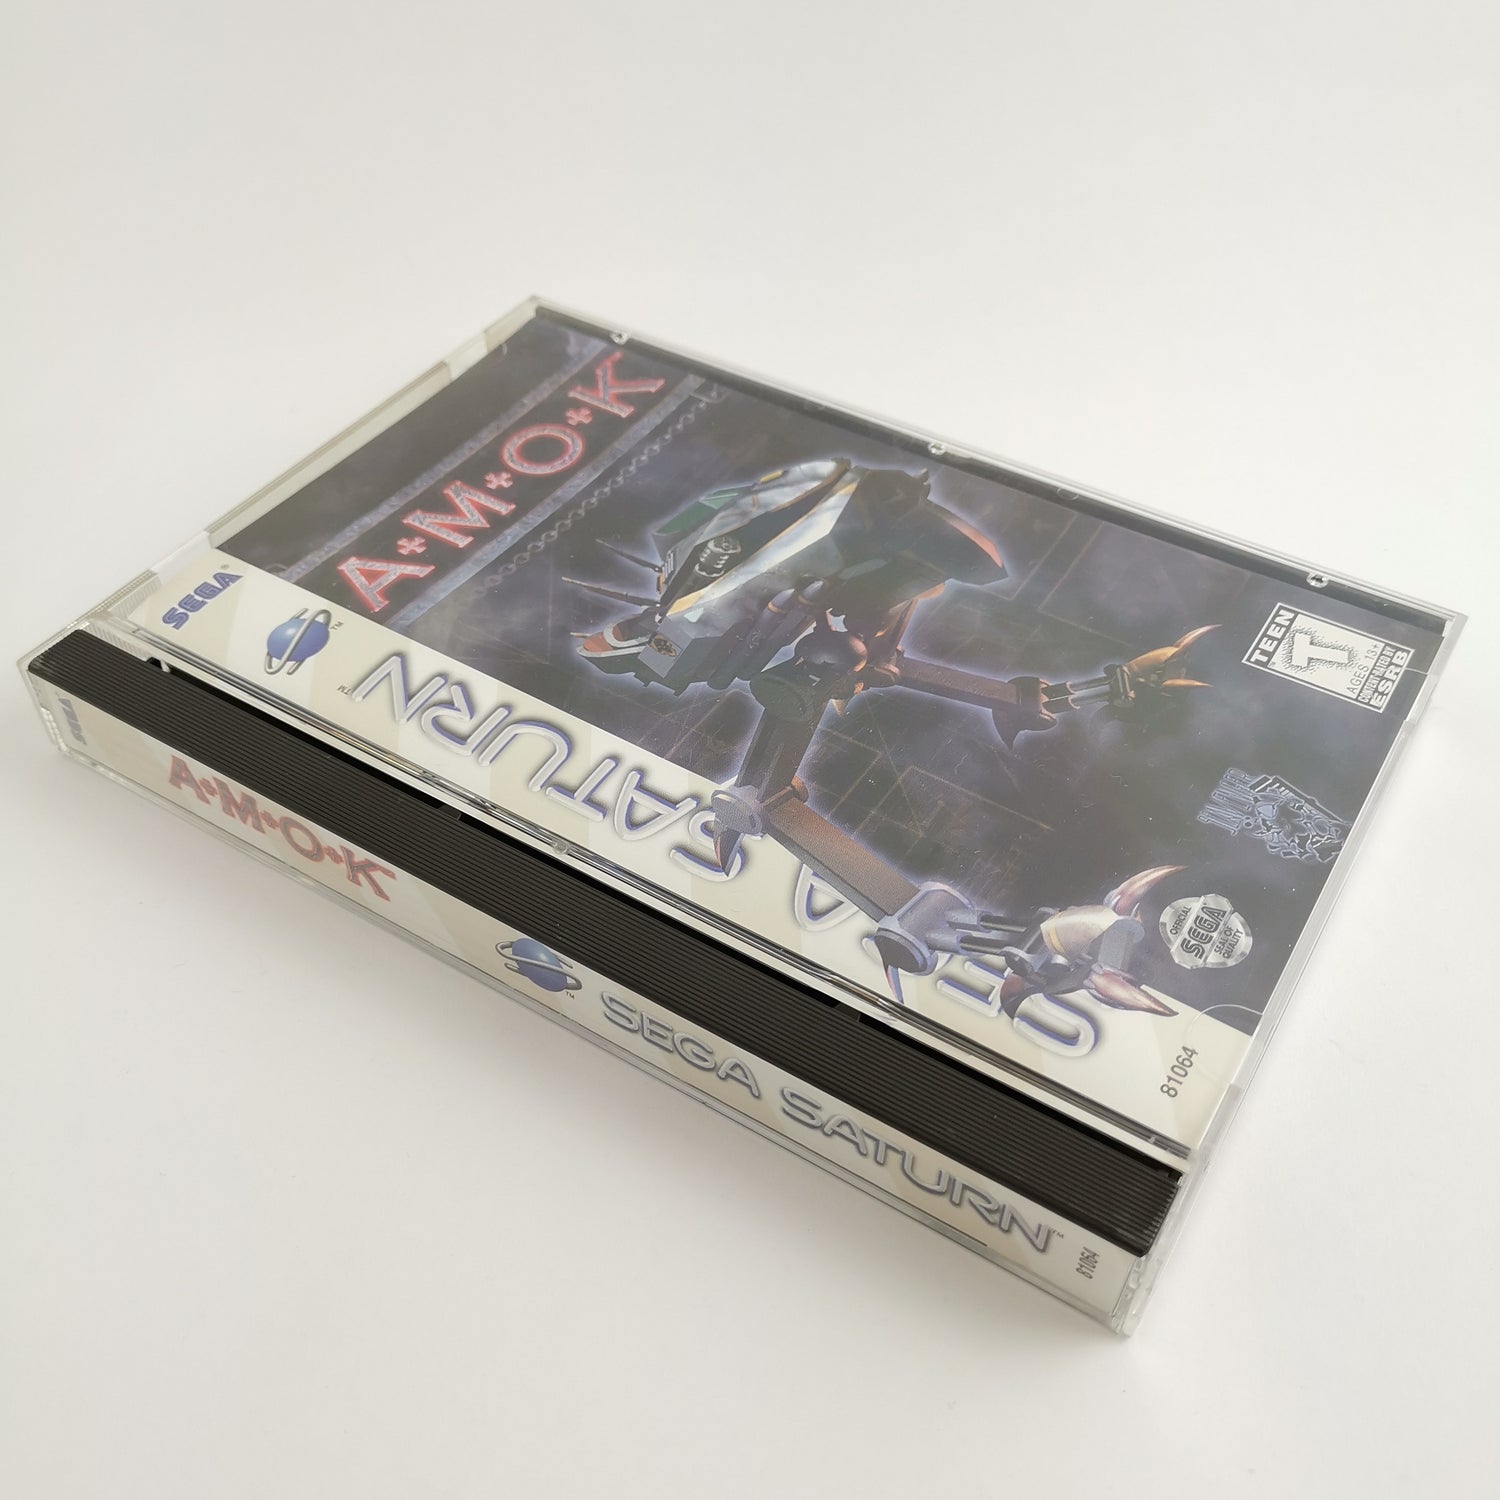 Sega Saturn Spiel : Amok - OVP & Anleitung | NTSC-U/C USA